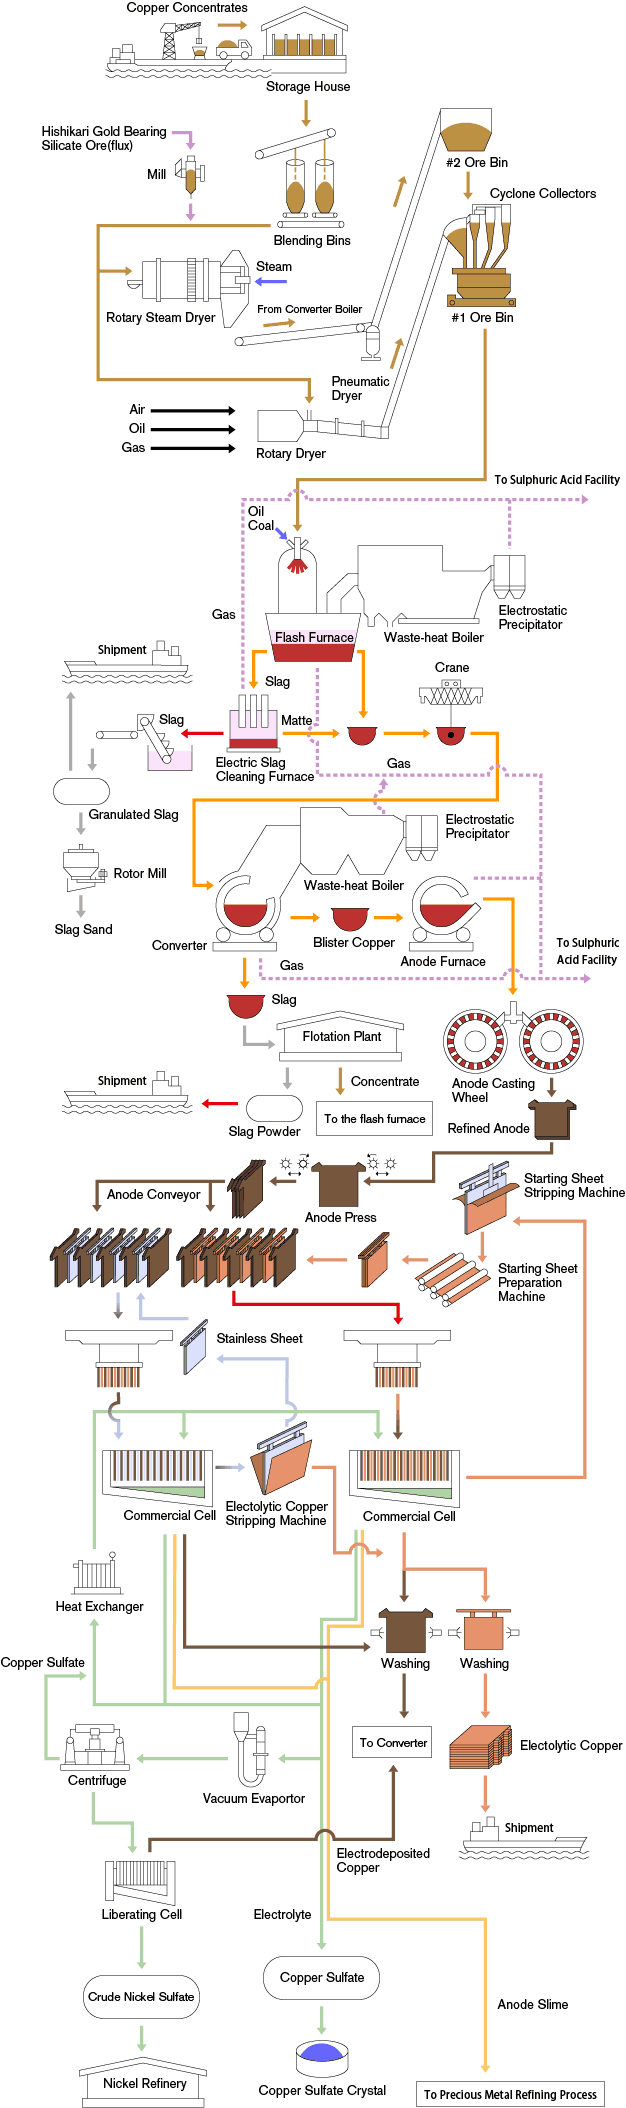 copper-smelting-process